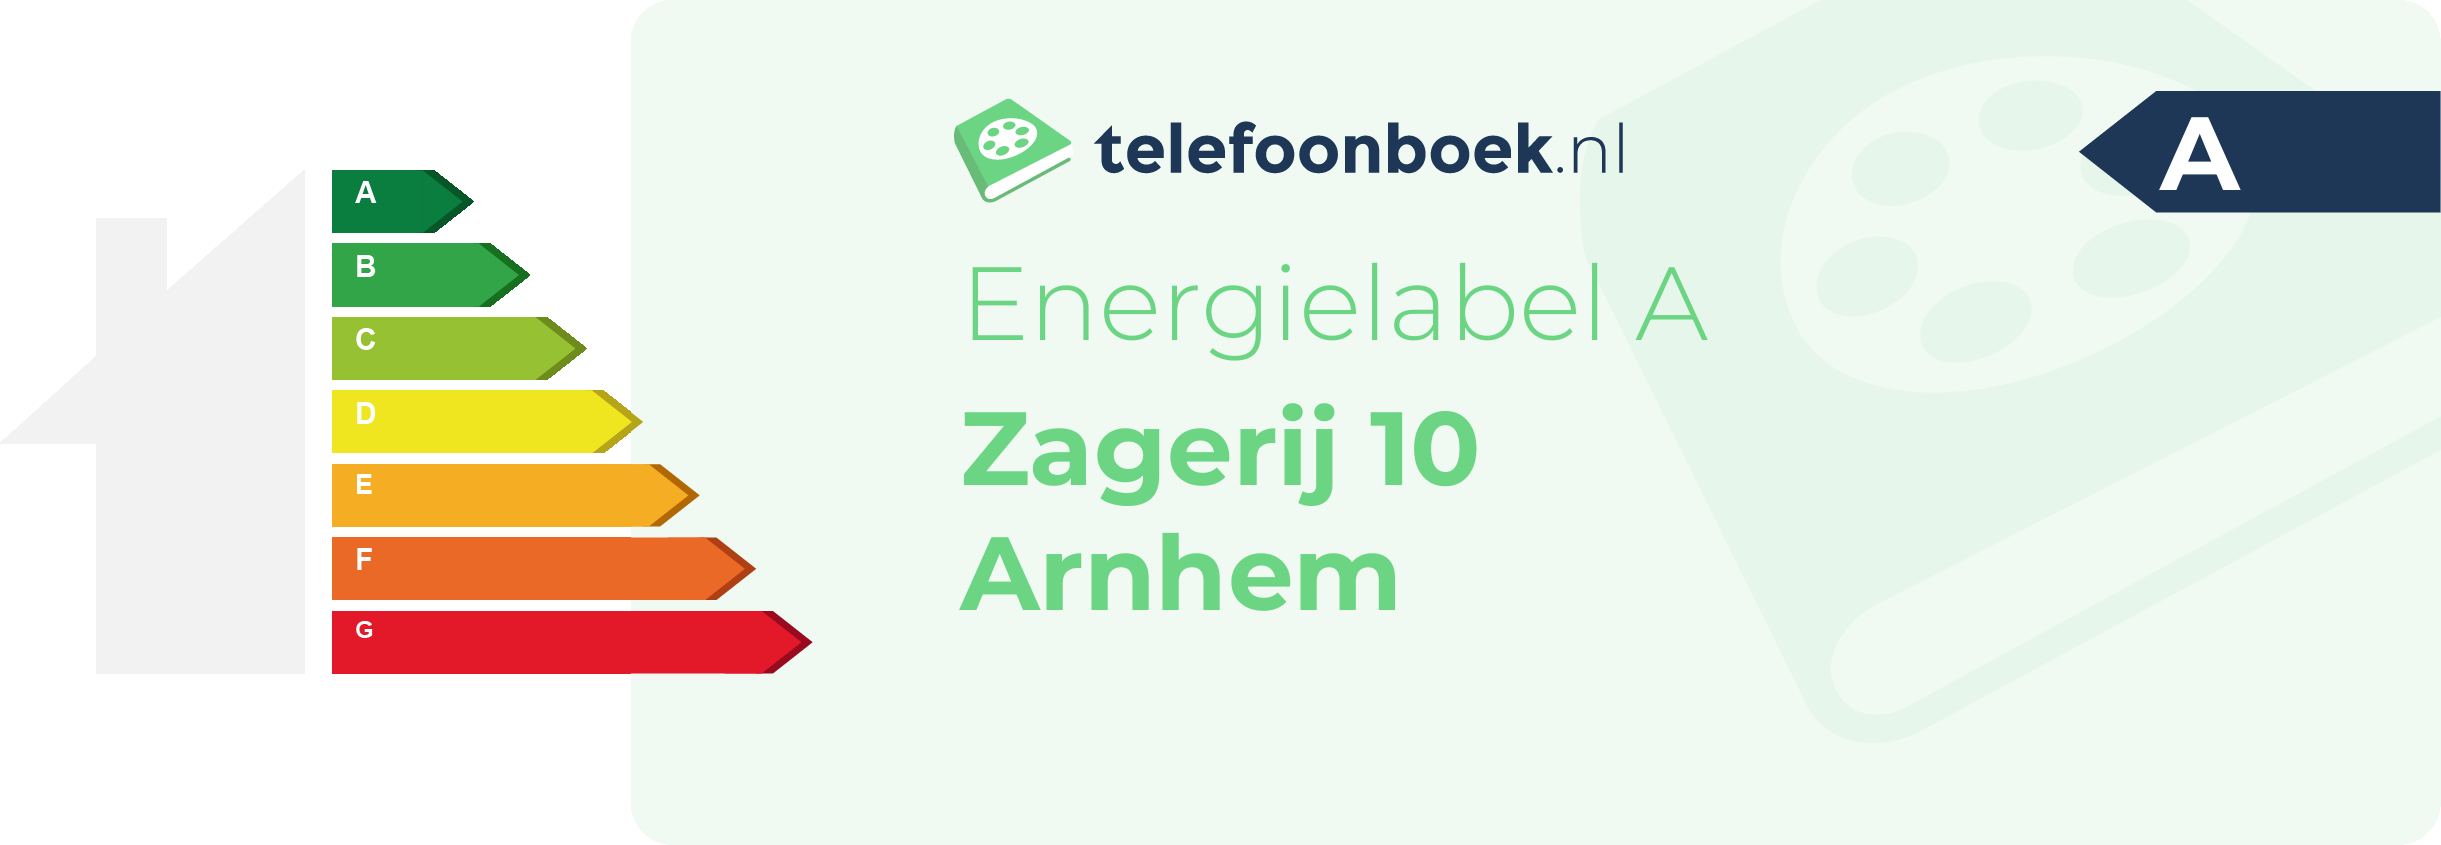 Energielabel Zagerij 10 Arnhem